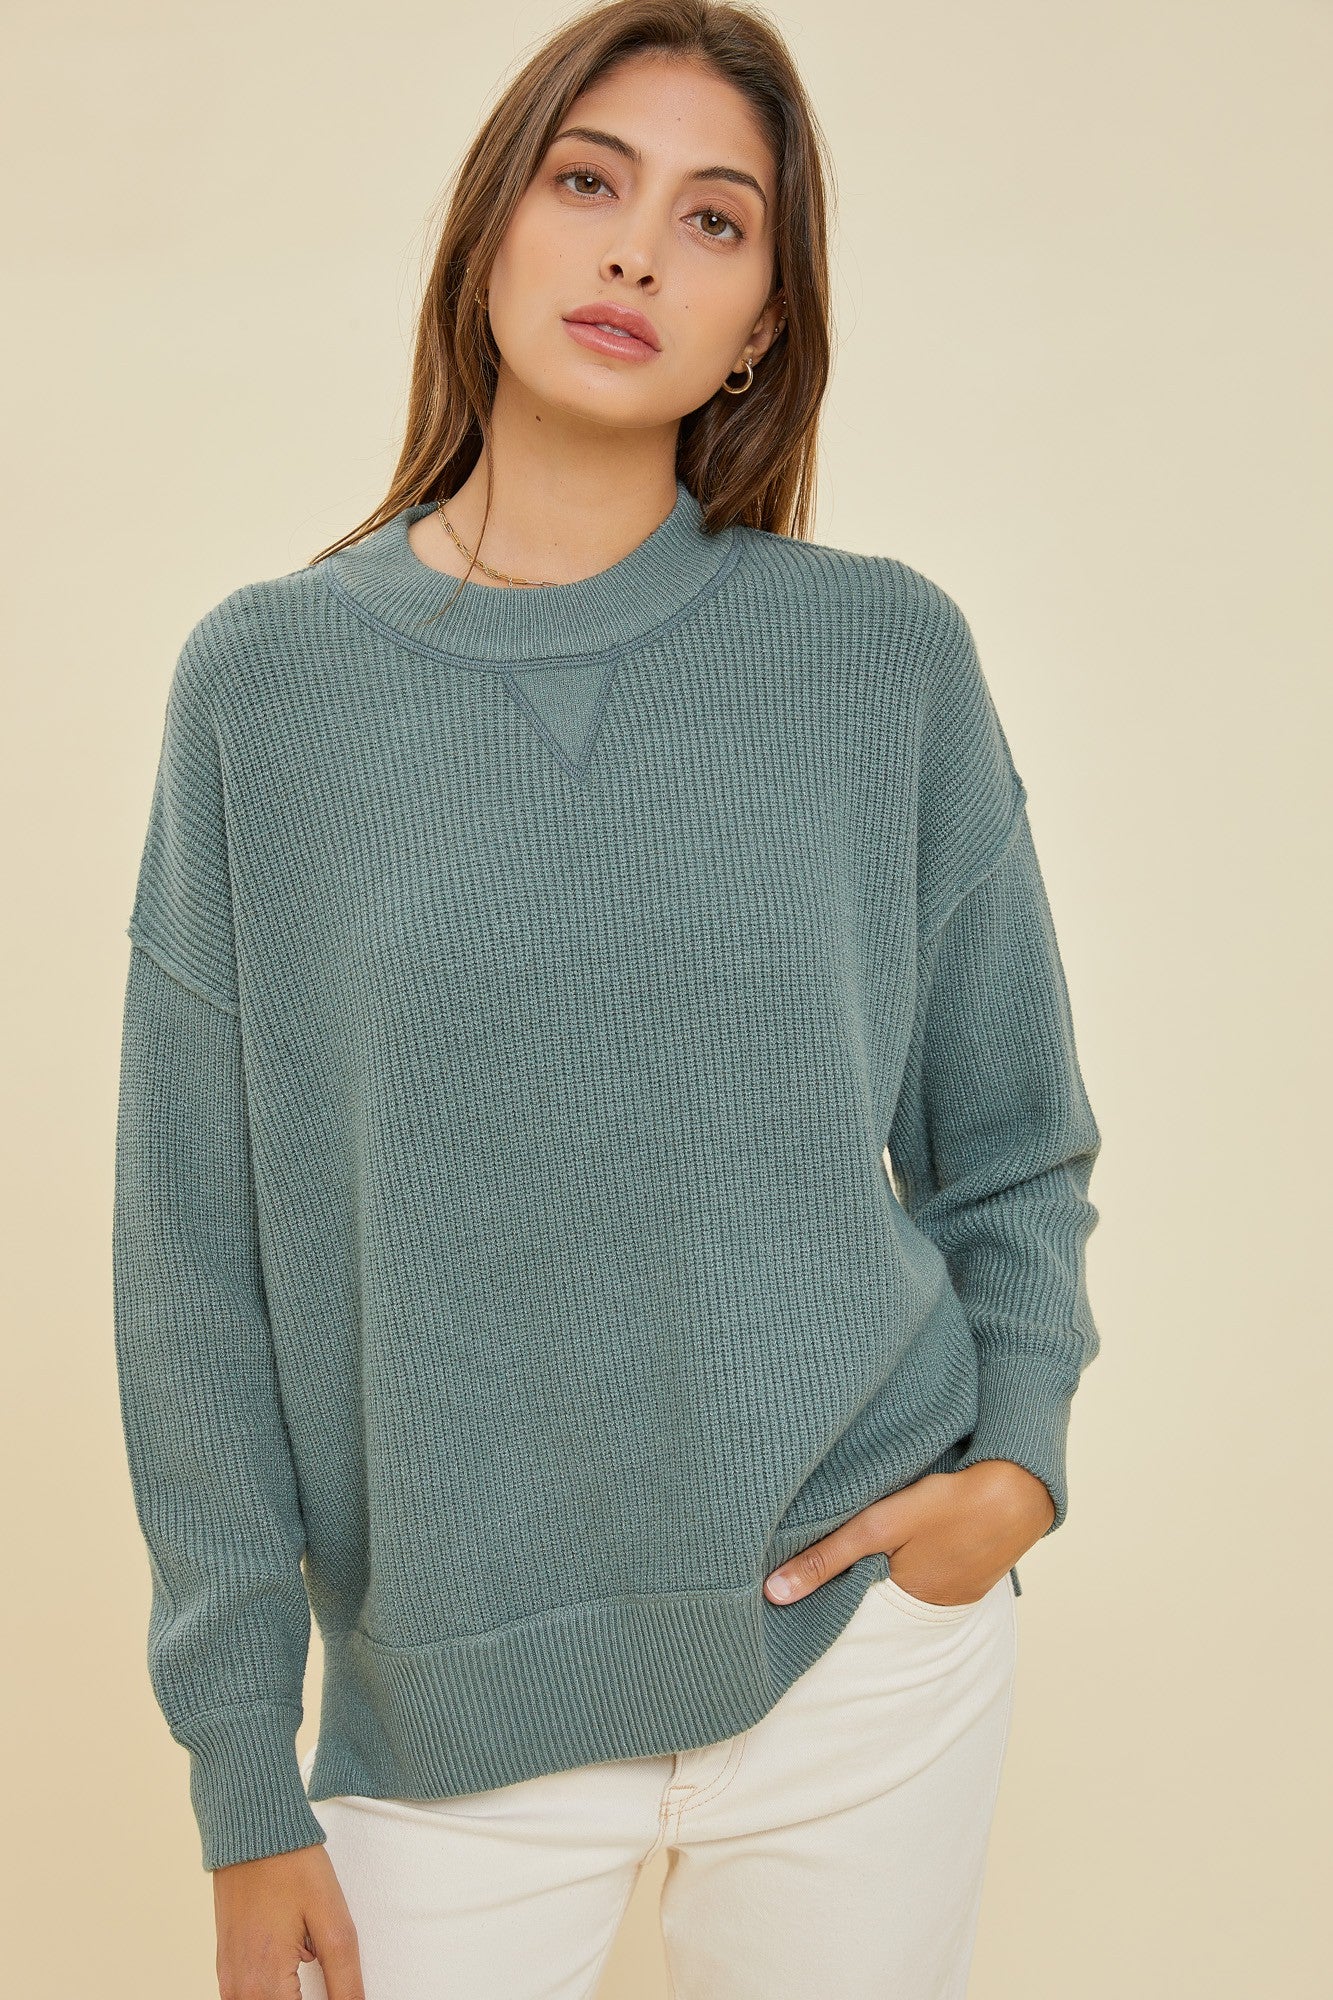 Maeve Sweater - Spruce